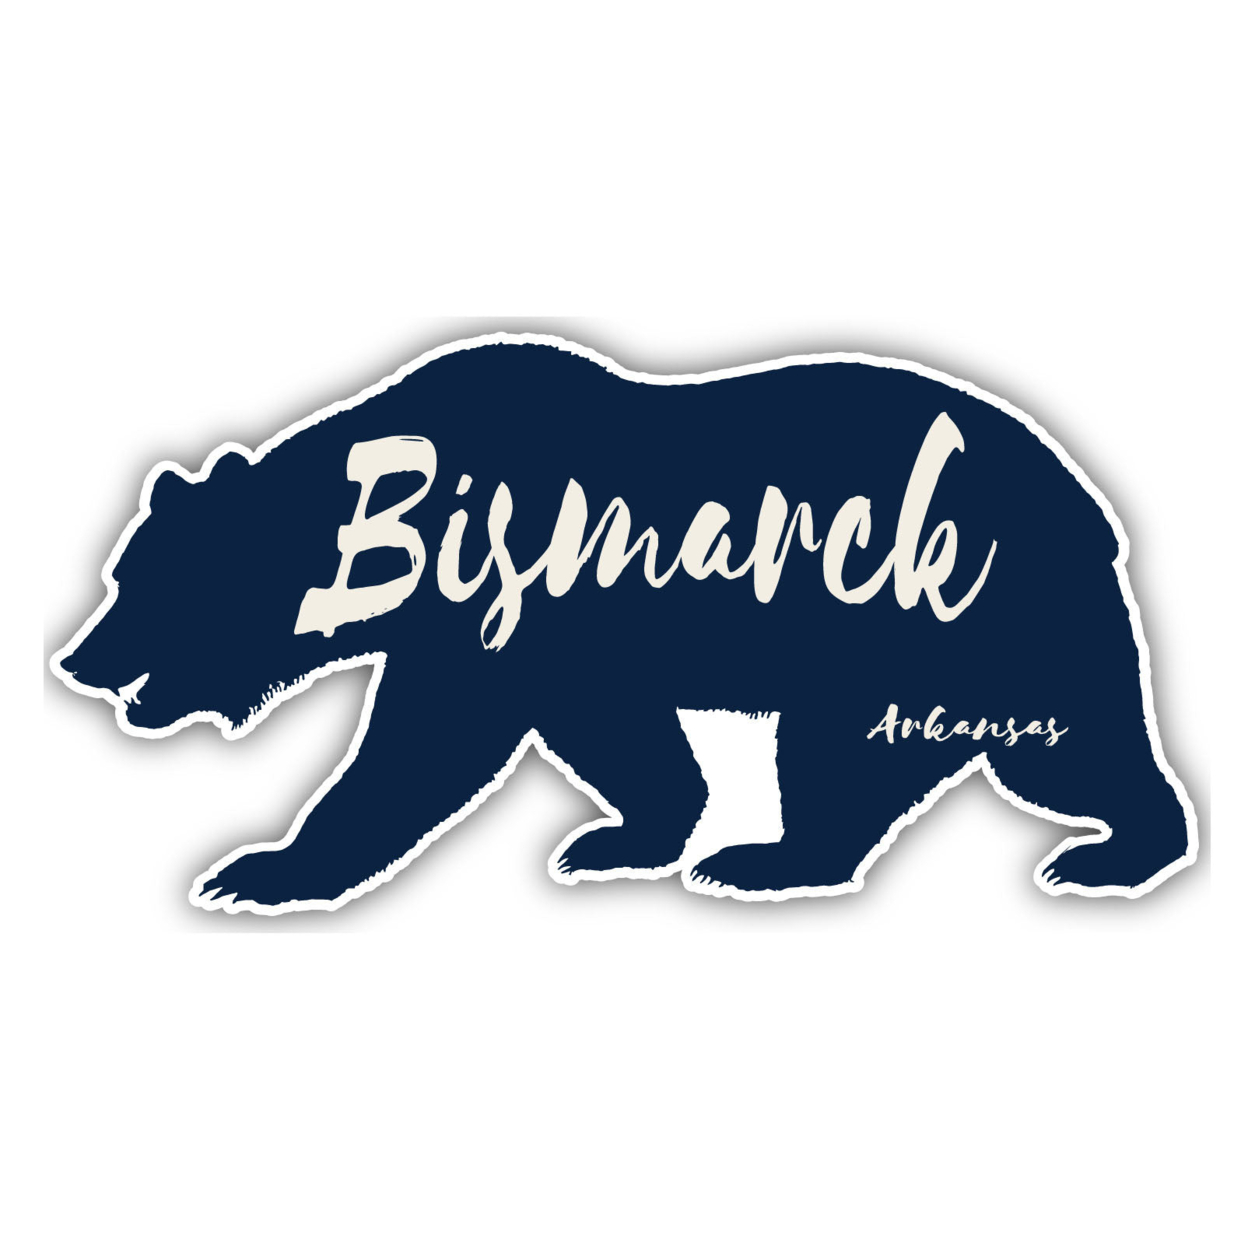 Bismarck Arkansas Souvenir Decorative Stickers (Choose Theme And Size) - 4-Pack, 4-Inch, Bear